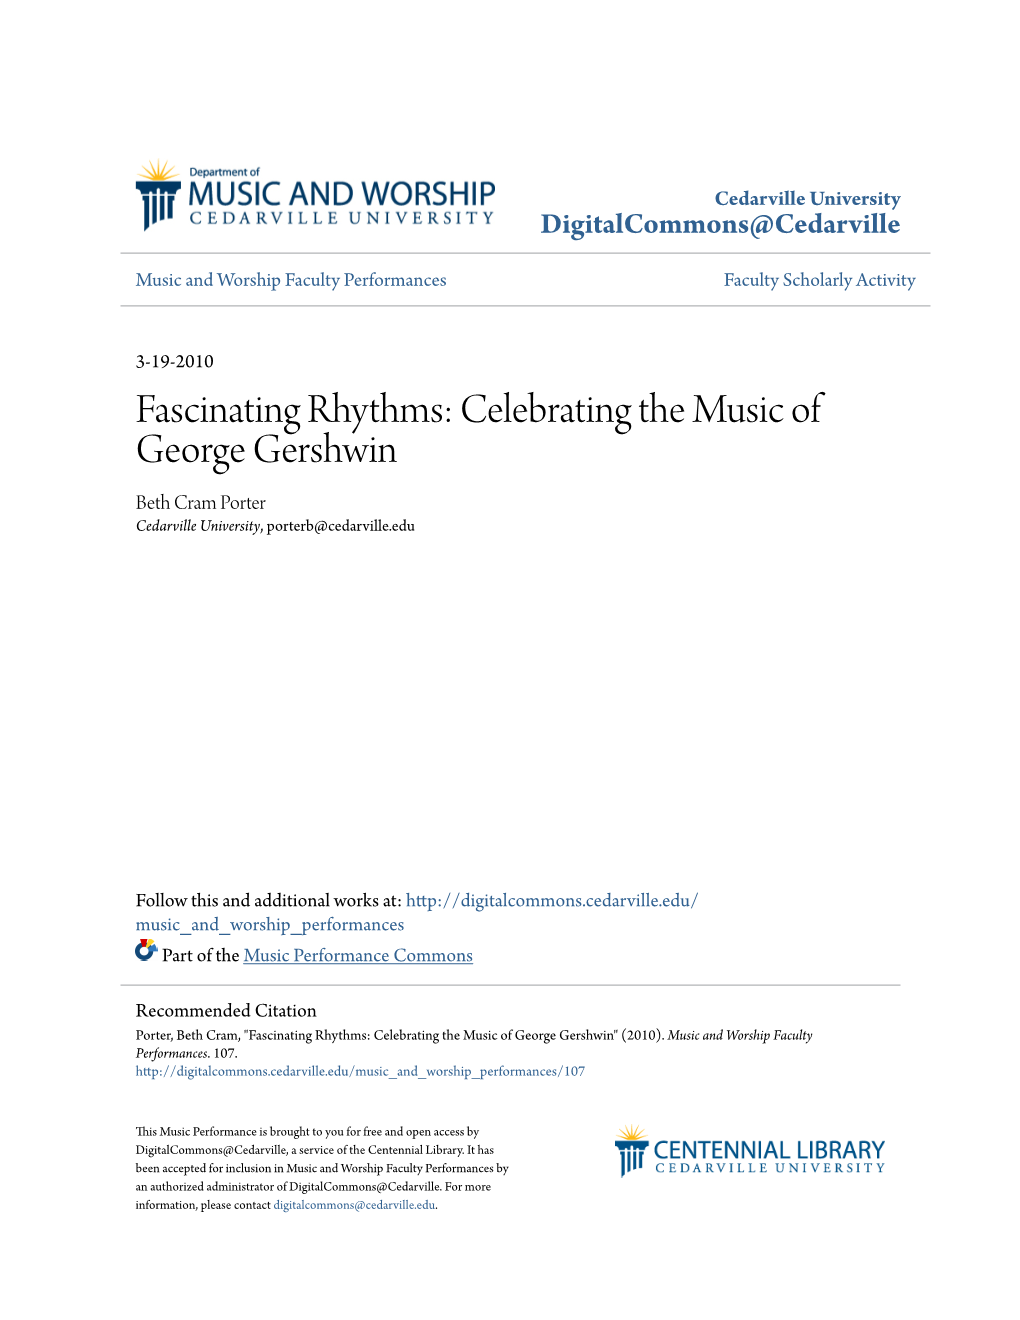 Celebrating the Music of George Gershwin Beth Cram Porter Cedarville University, Porterb@Cedarville.Edu